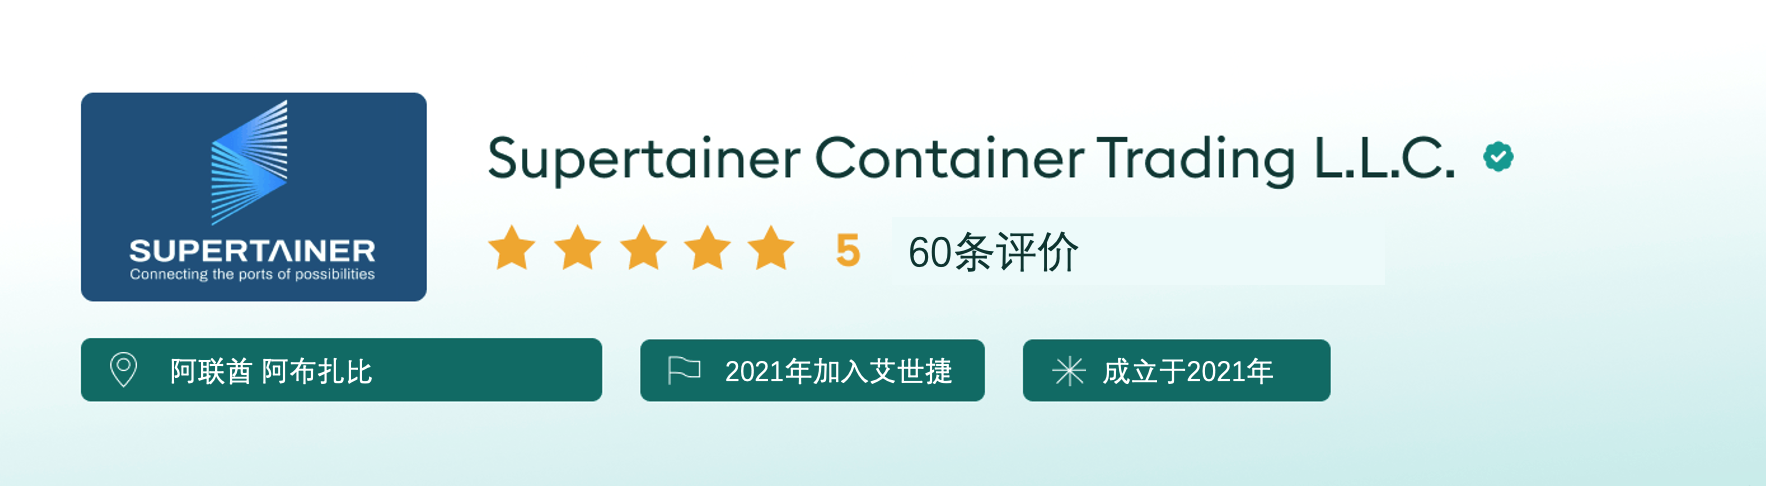 Supertainer Container Trading L.L.C.